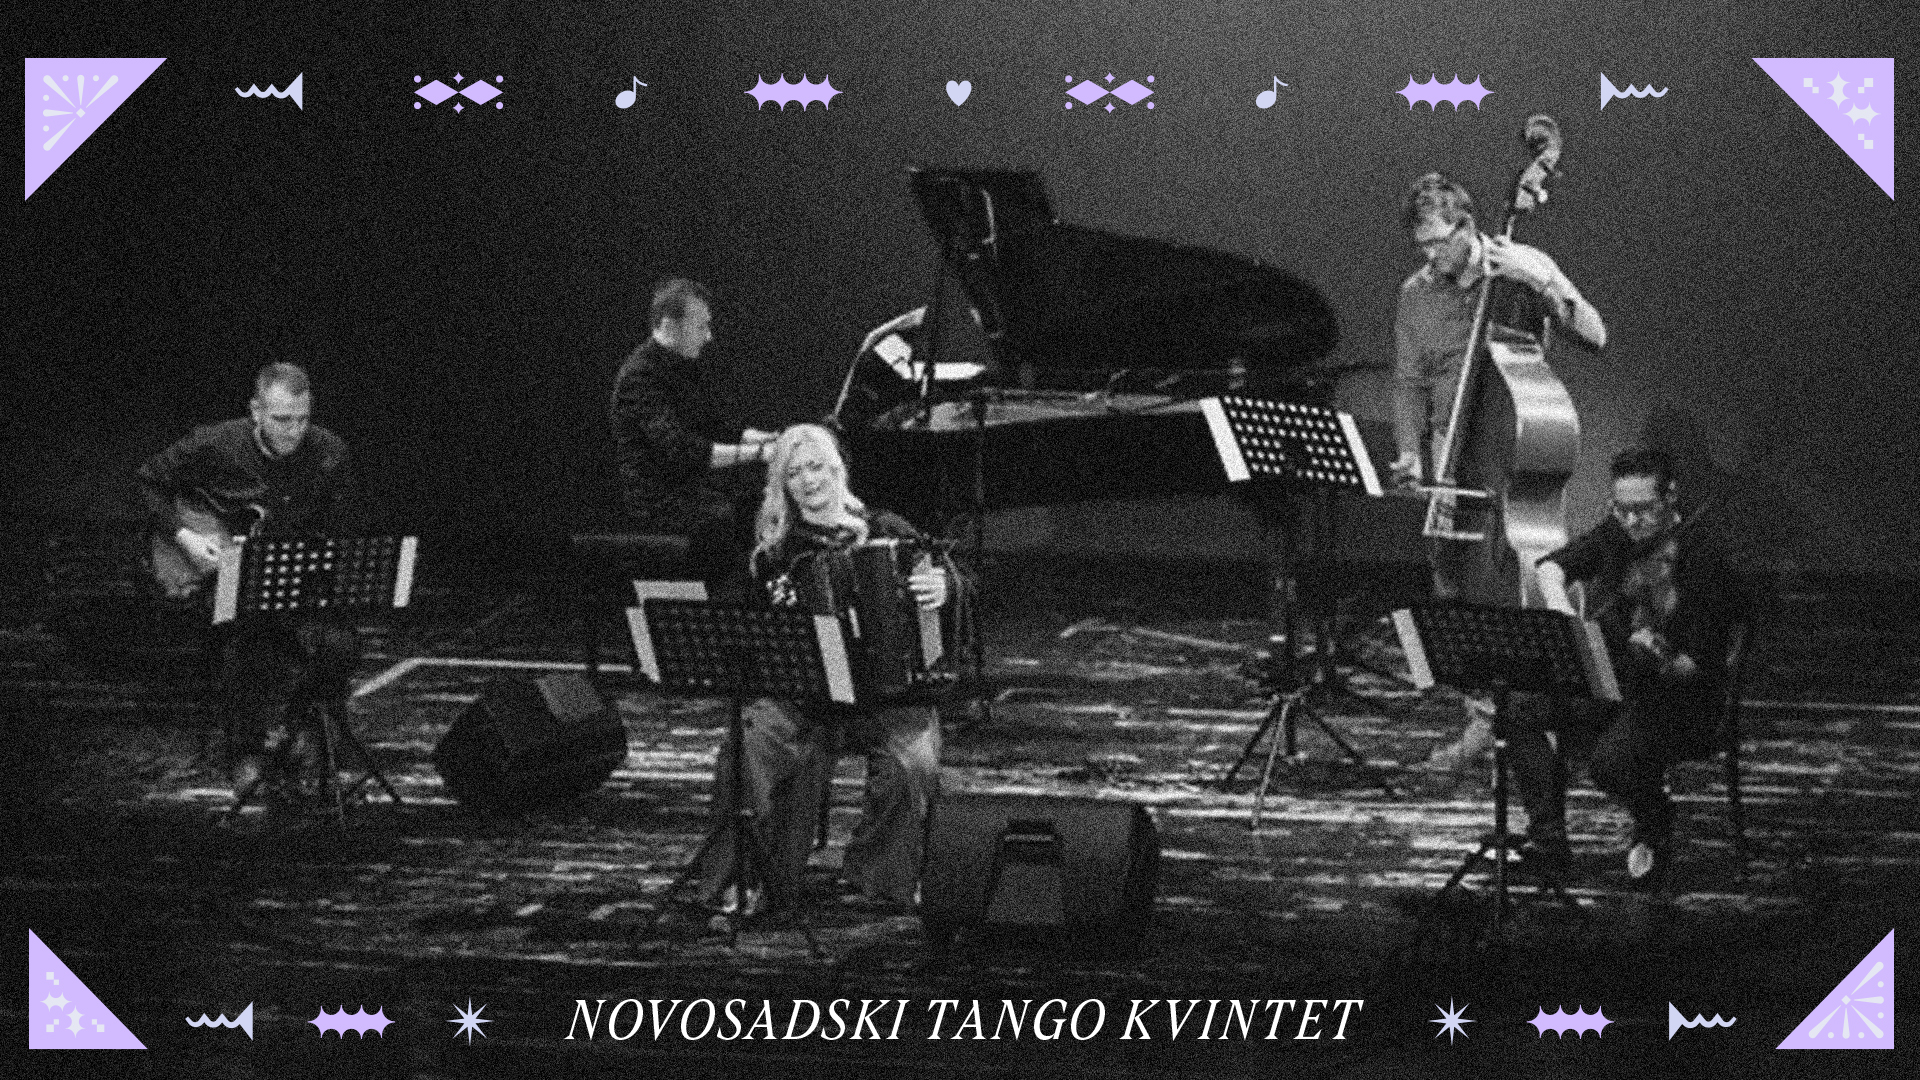 The Novi Sad Tango Quintet